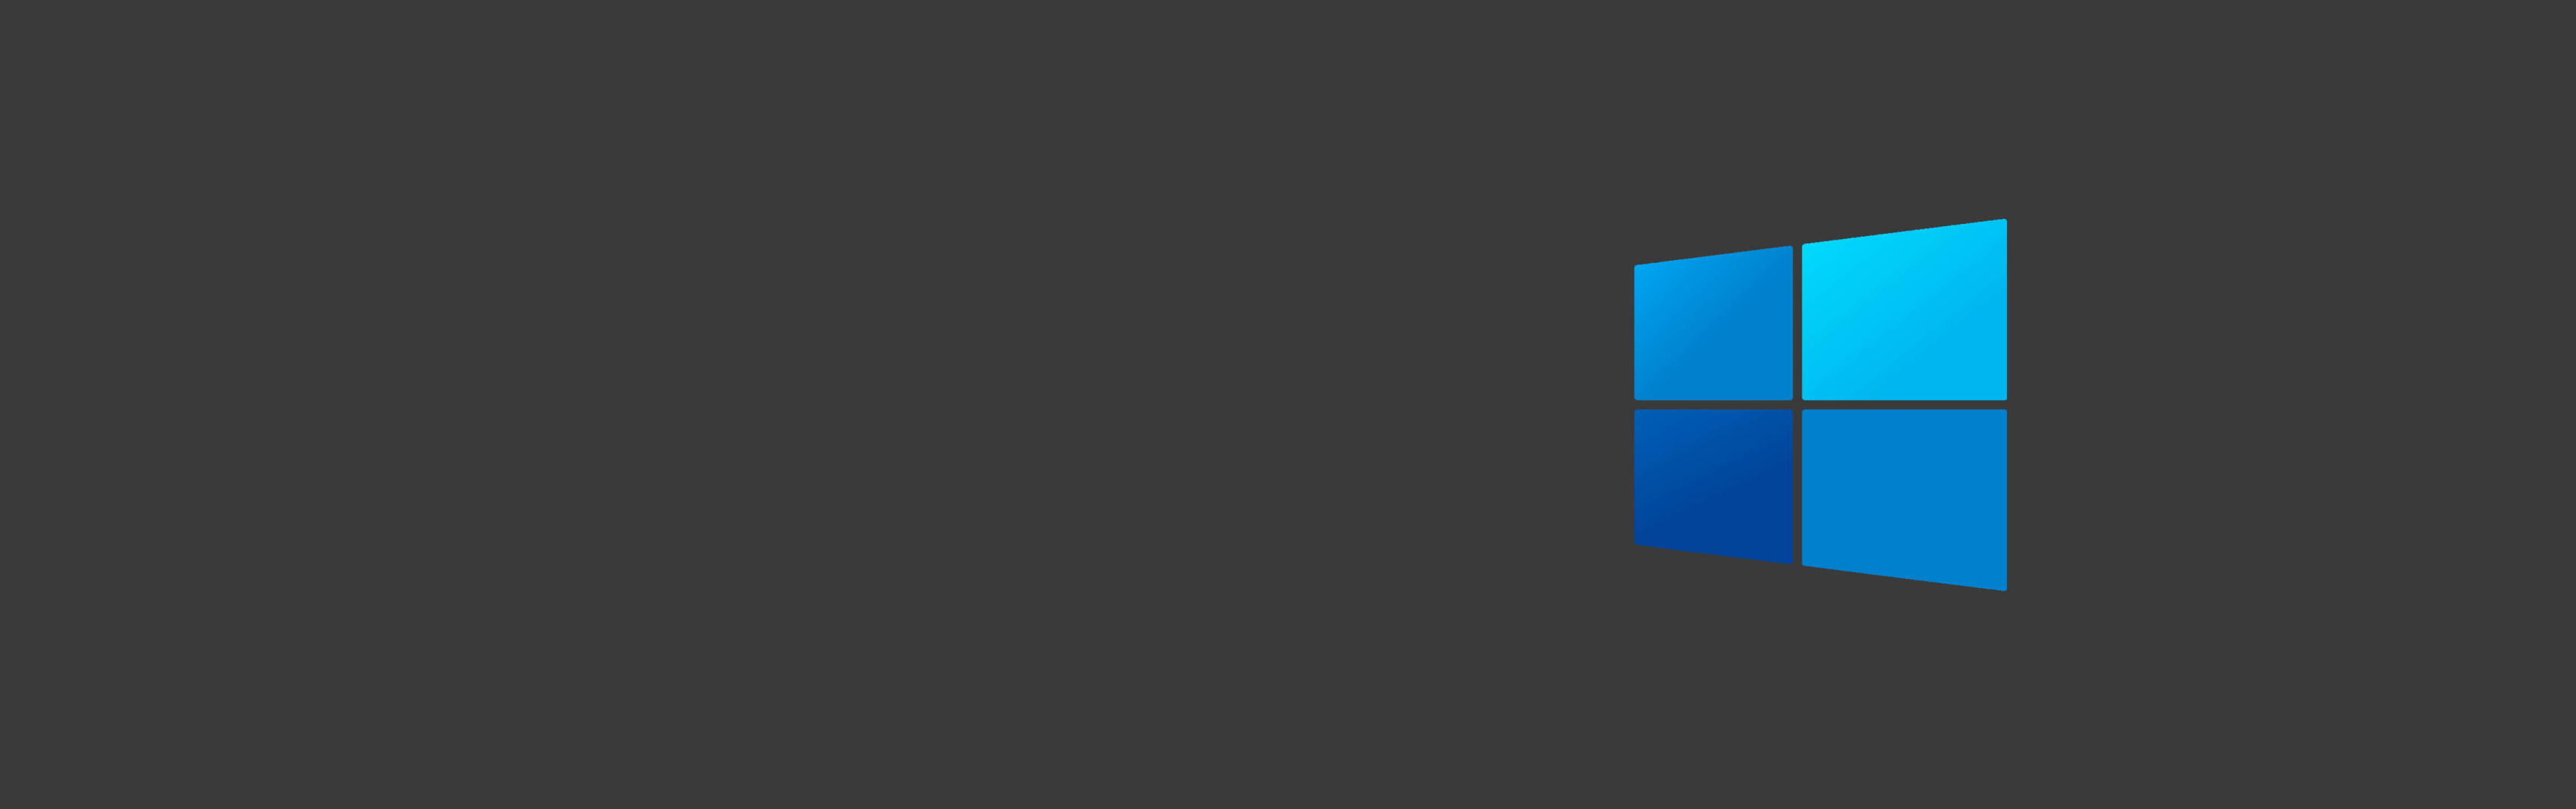 3440x1080 Windows 10 Dark Logo Minimal 3440x1080 Resolution Wallpaper ...